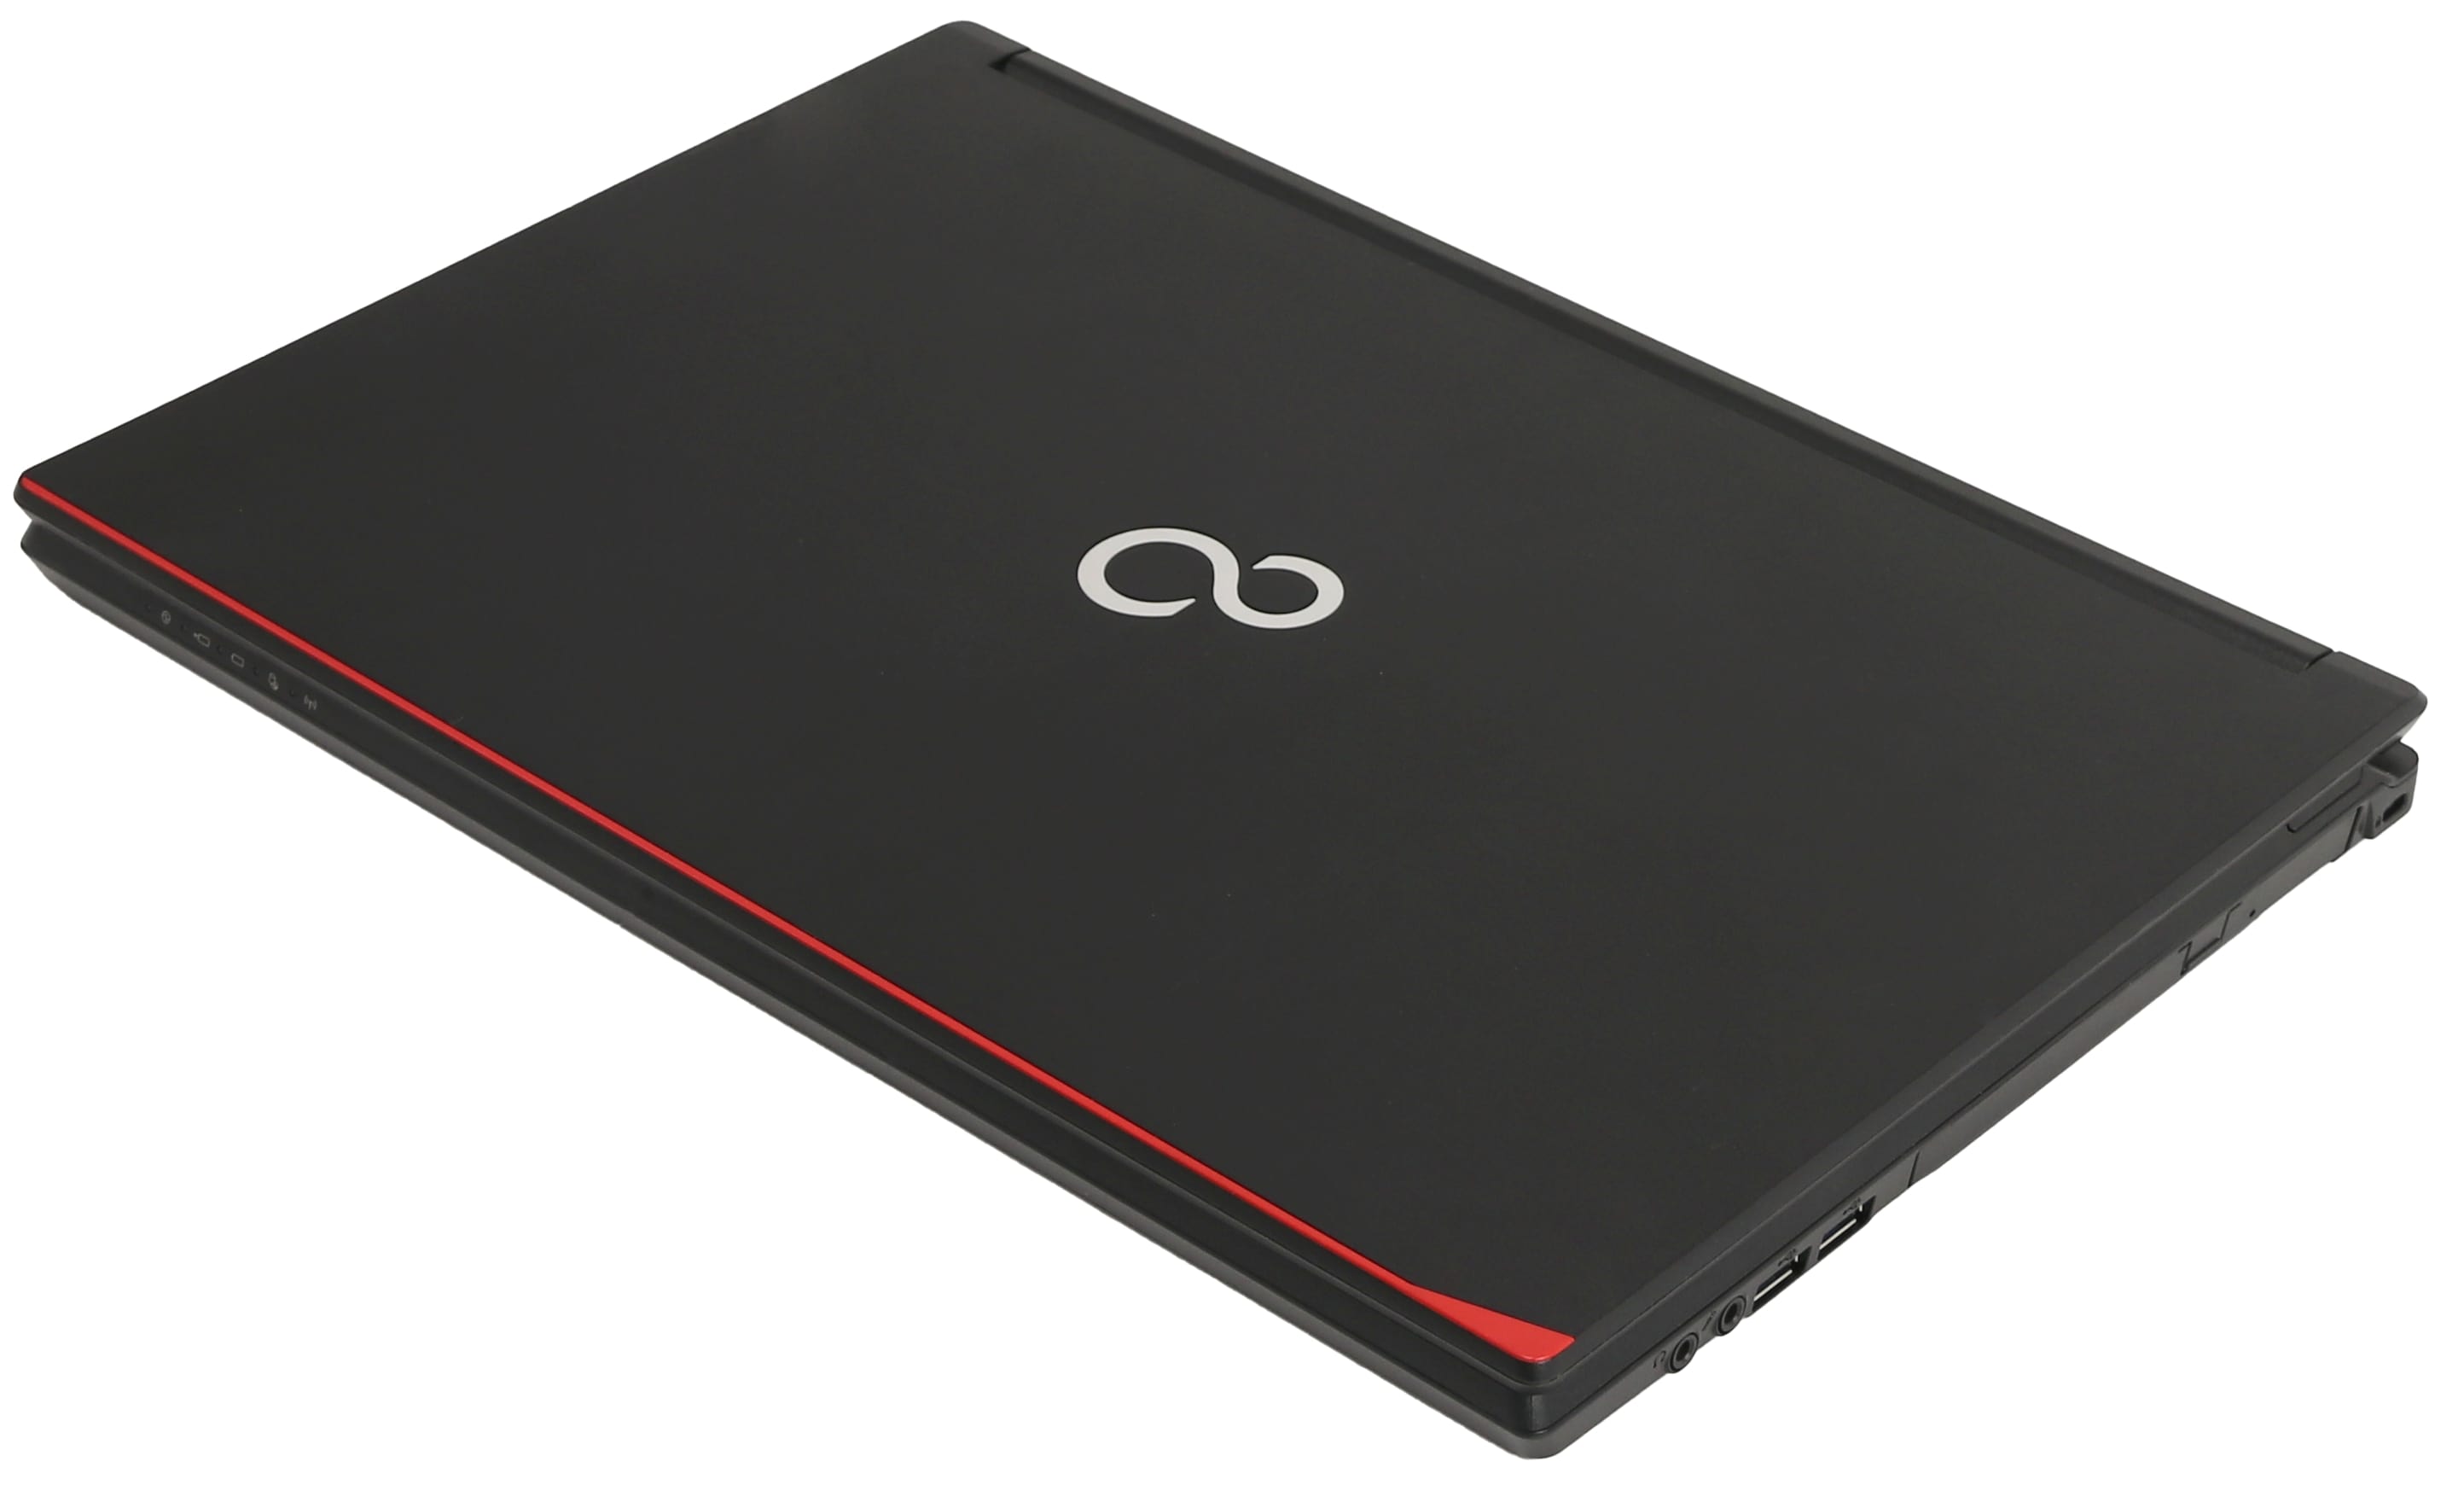 FUJITSU Notebook Lifebook E556, 39,6 cm (15,6"), i3, 8GB, 256 GB, Win10Pro, gebraucht